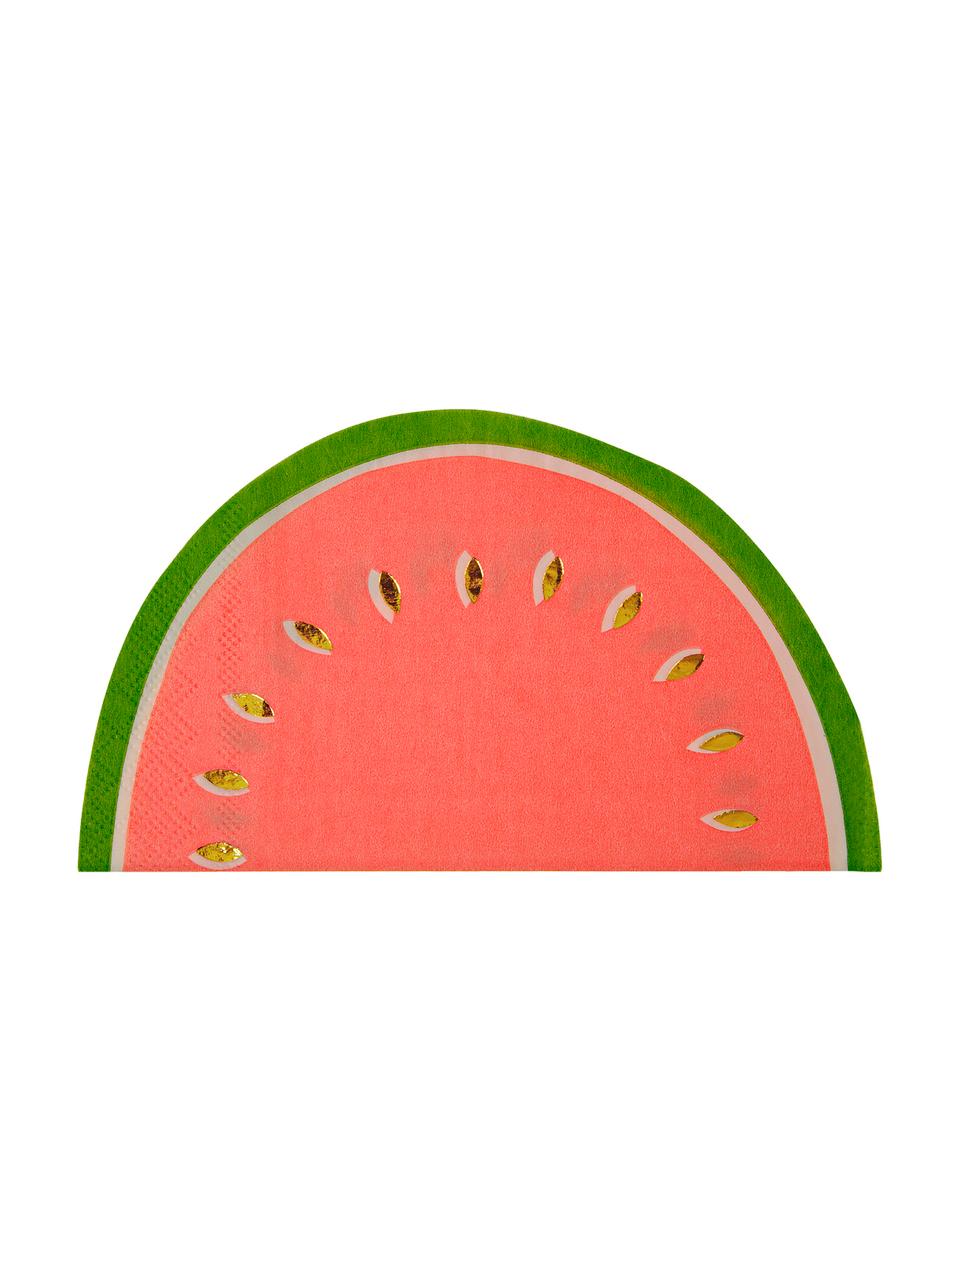 Servilletas de papel Watermelon, 16 uds., Papel, Rojo, verde, dorado, An 20 x L 17 cm